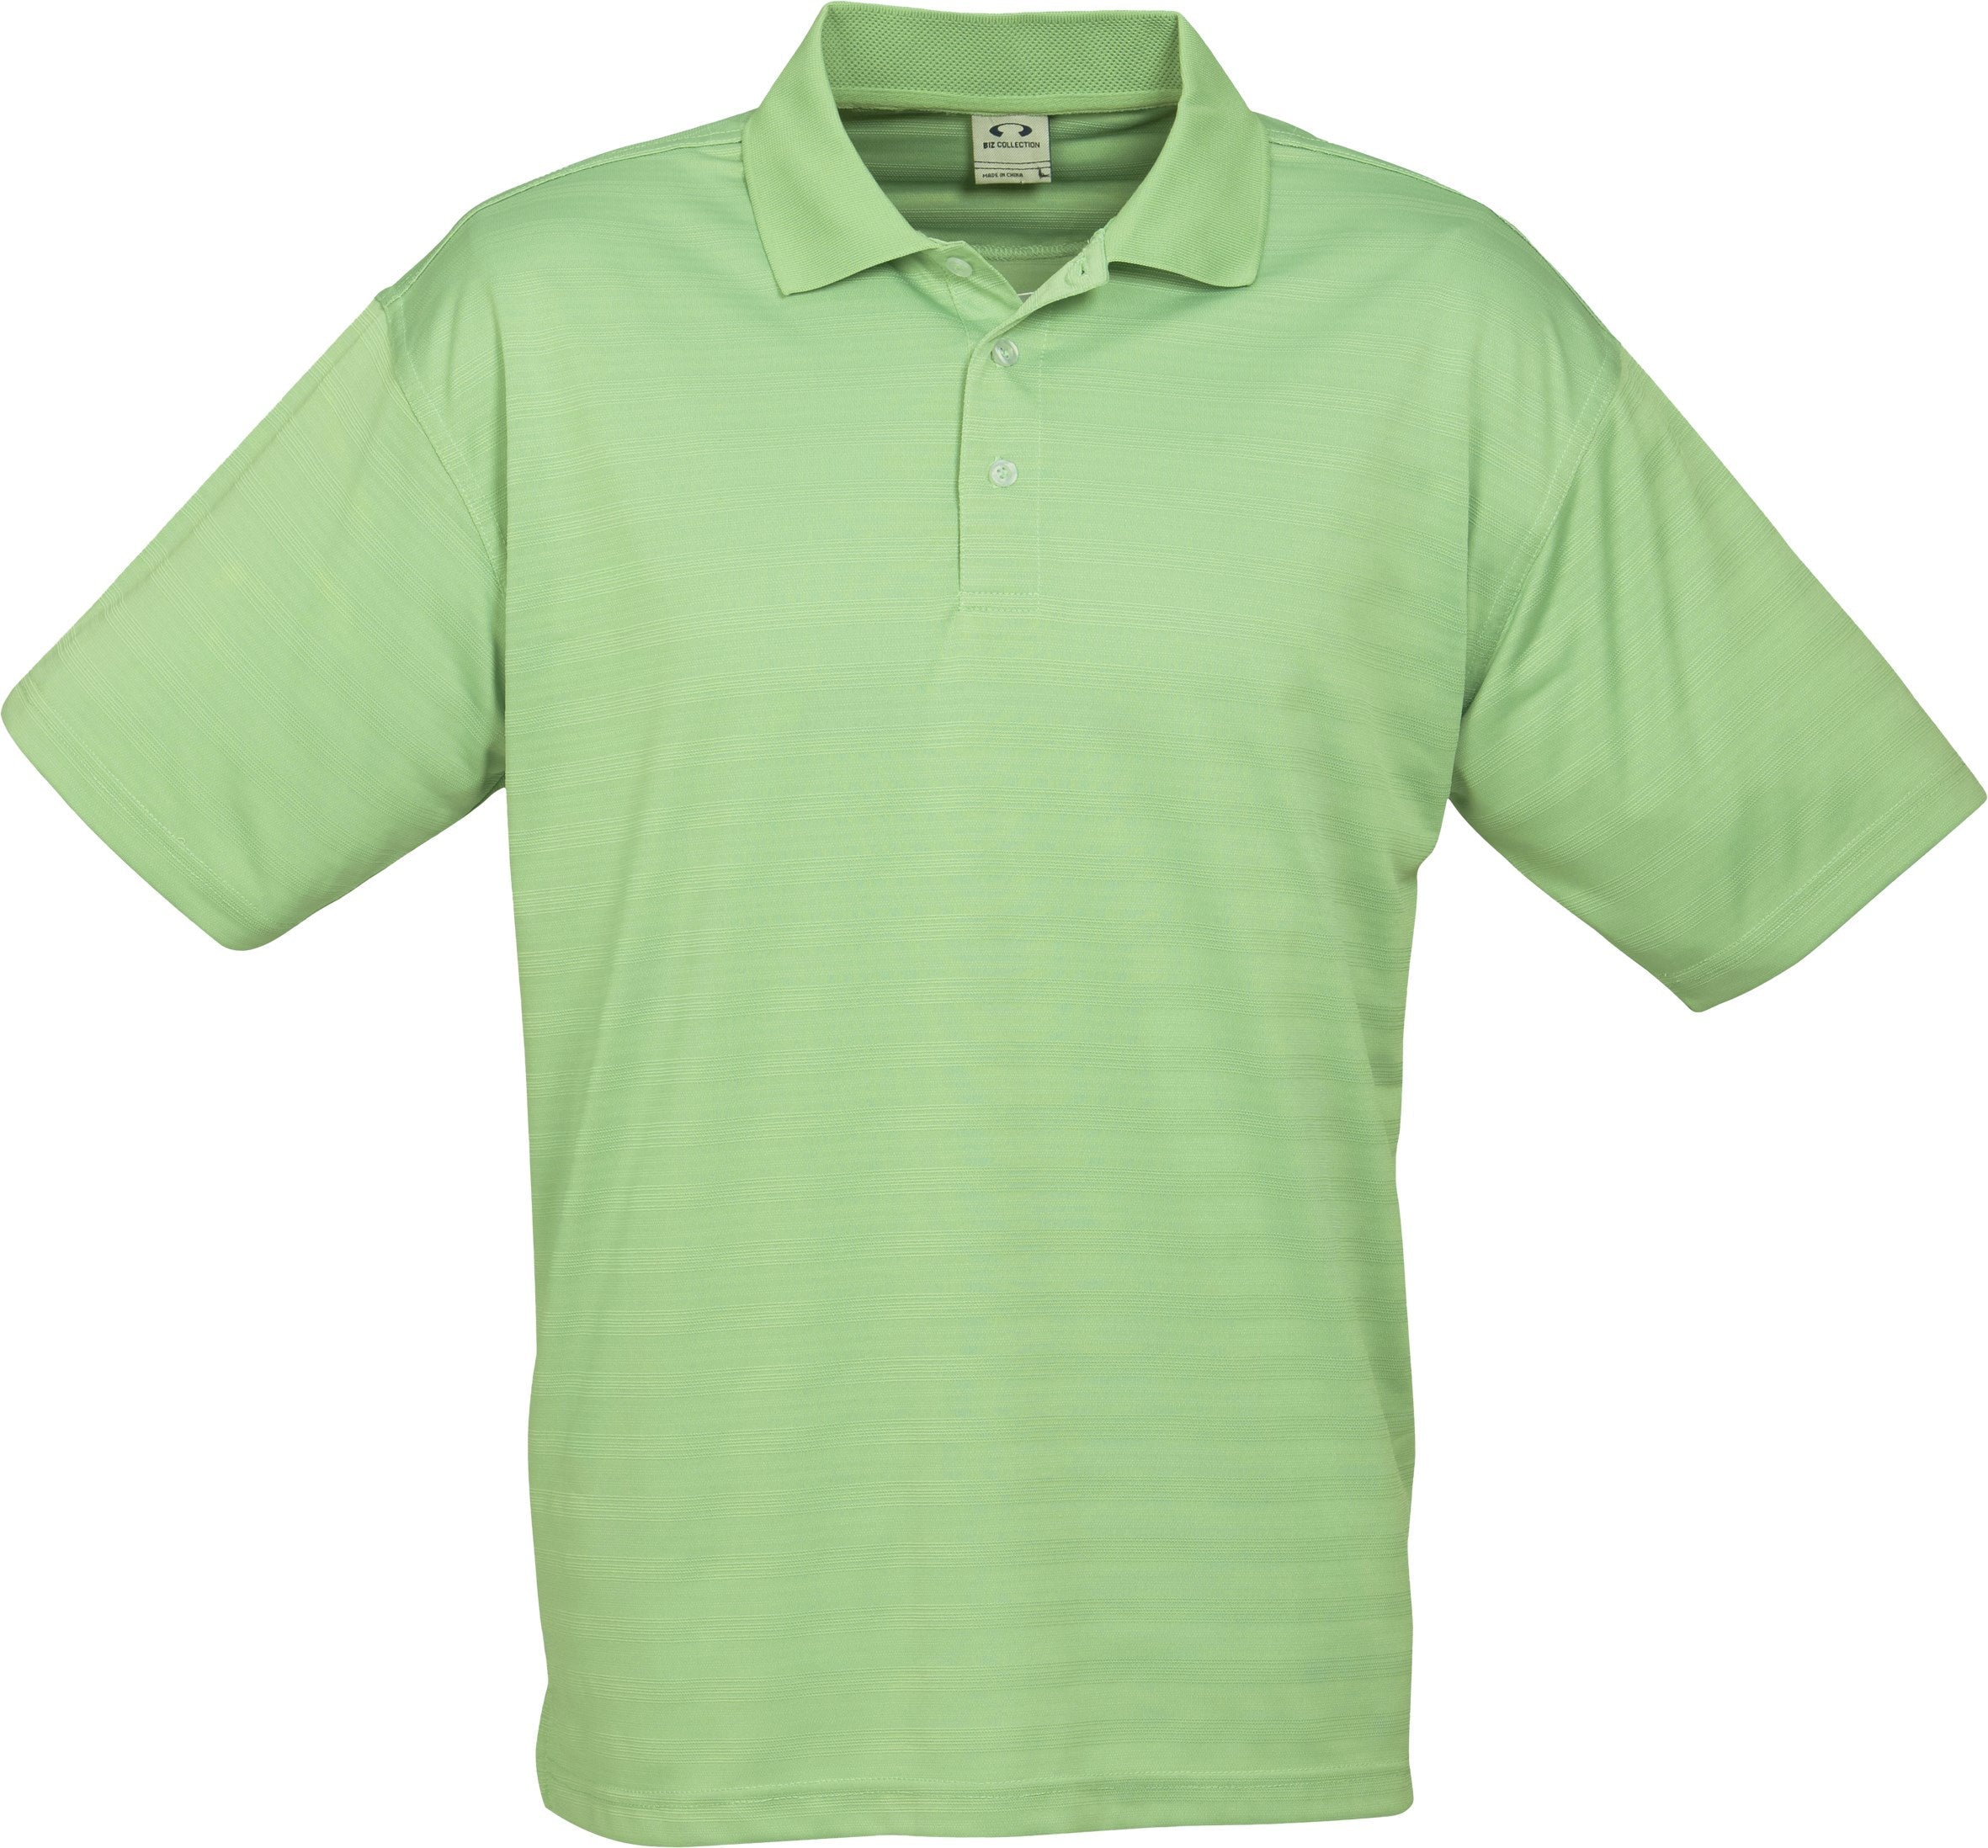 Mens Icon Golf Shirt-2XL-Lime-L